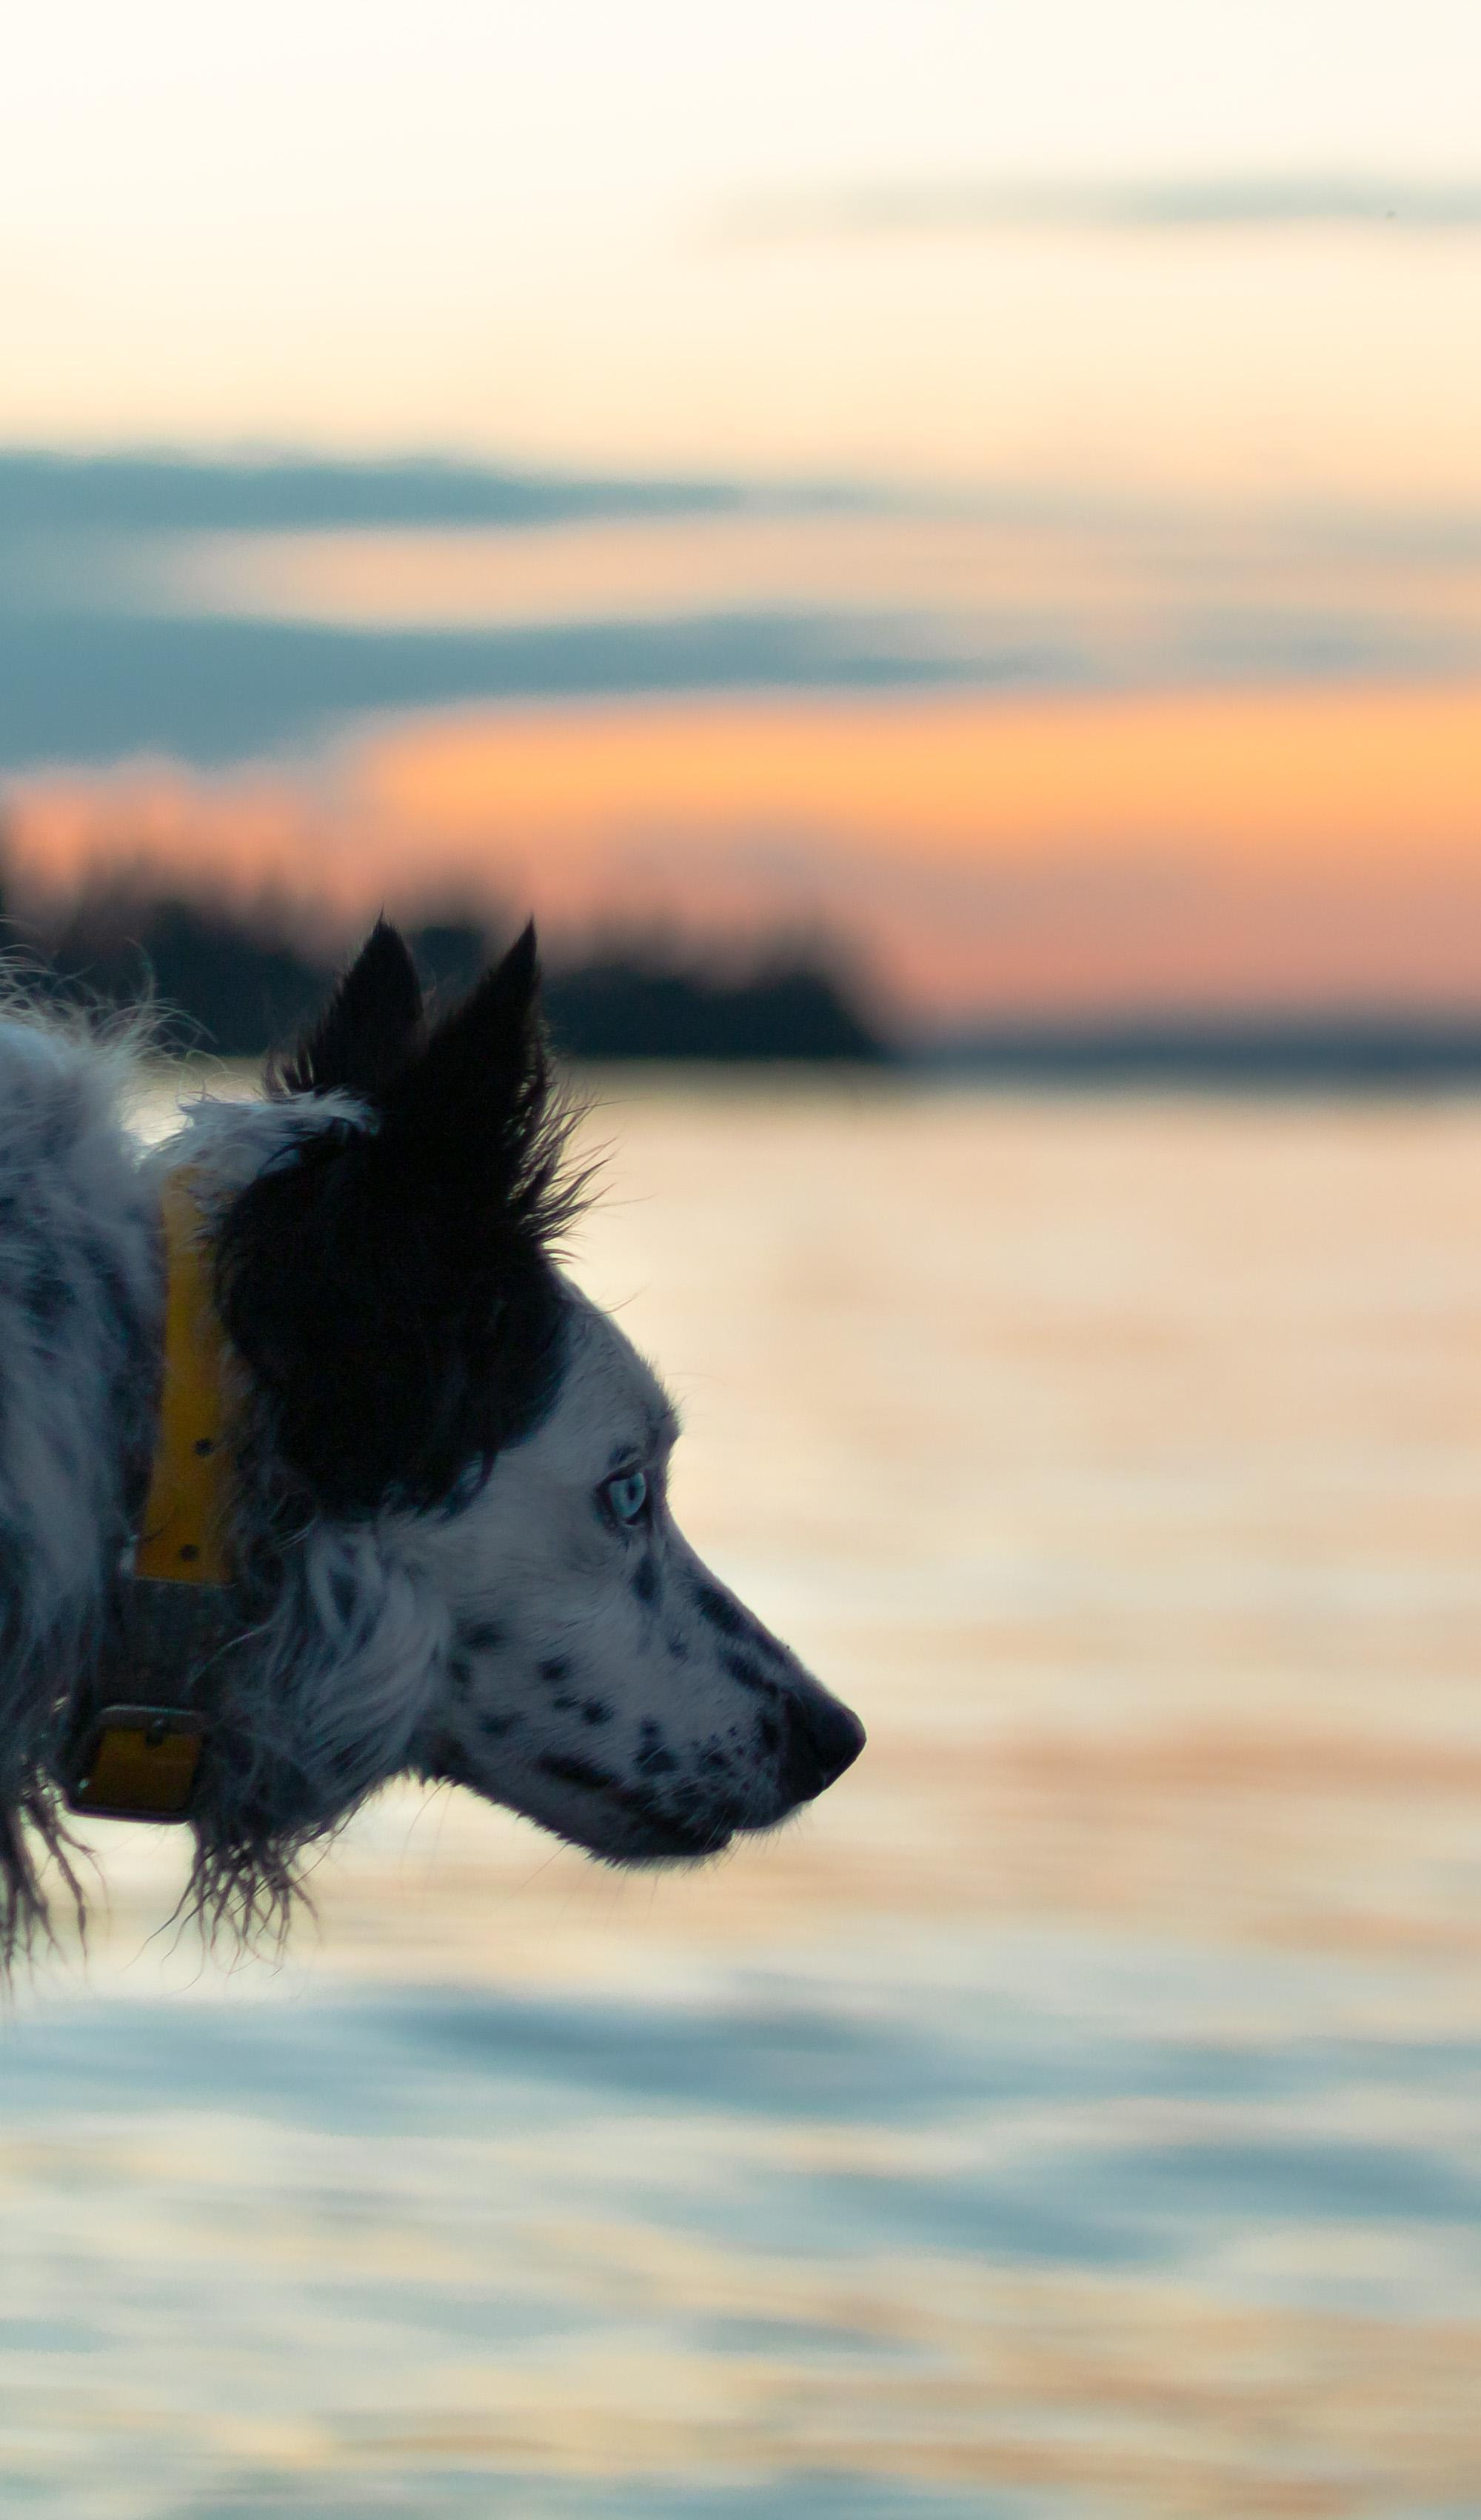 Goose control dog "Mink" looks out at Lake Washington